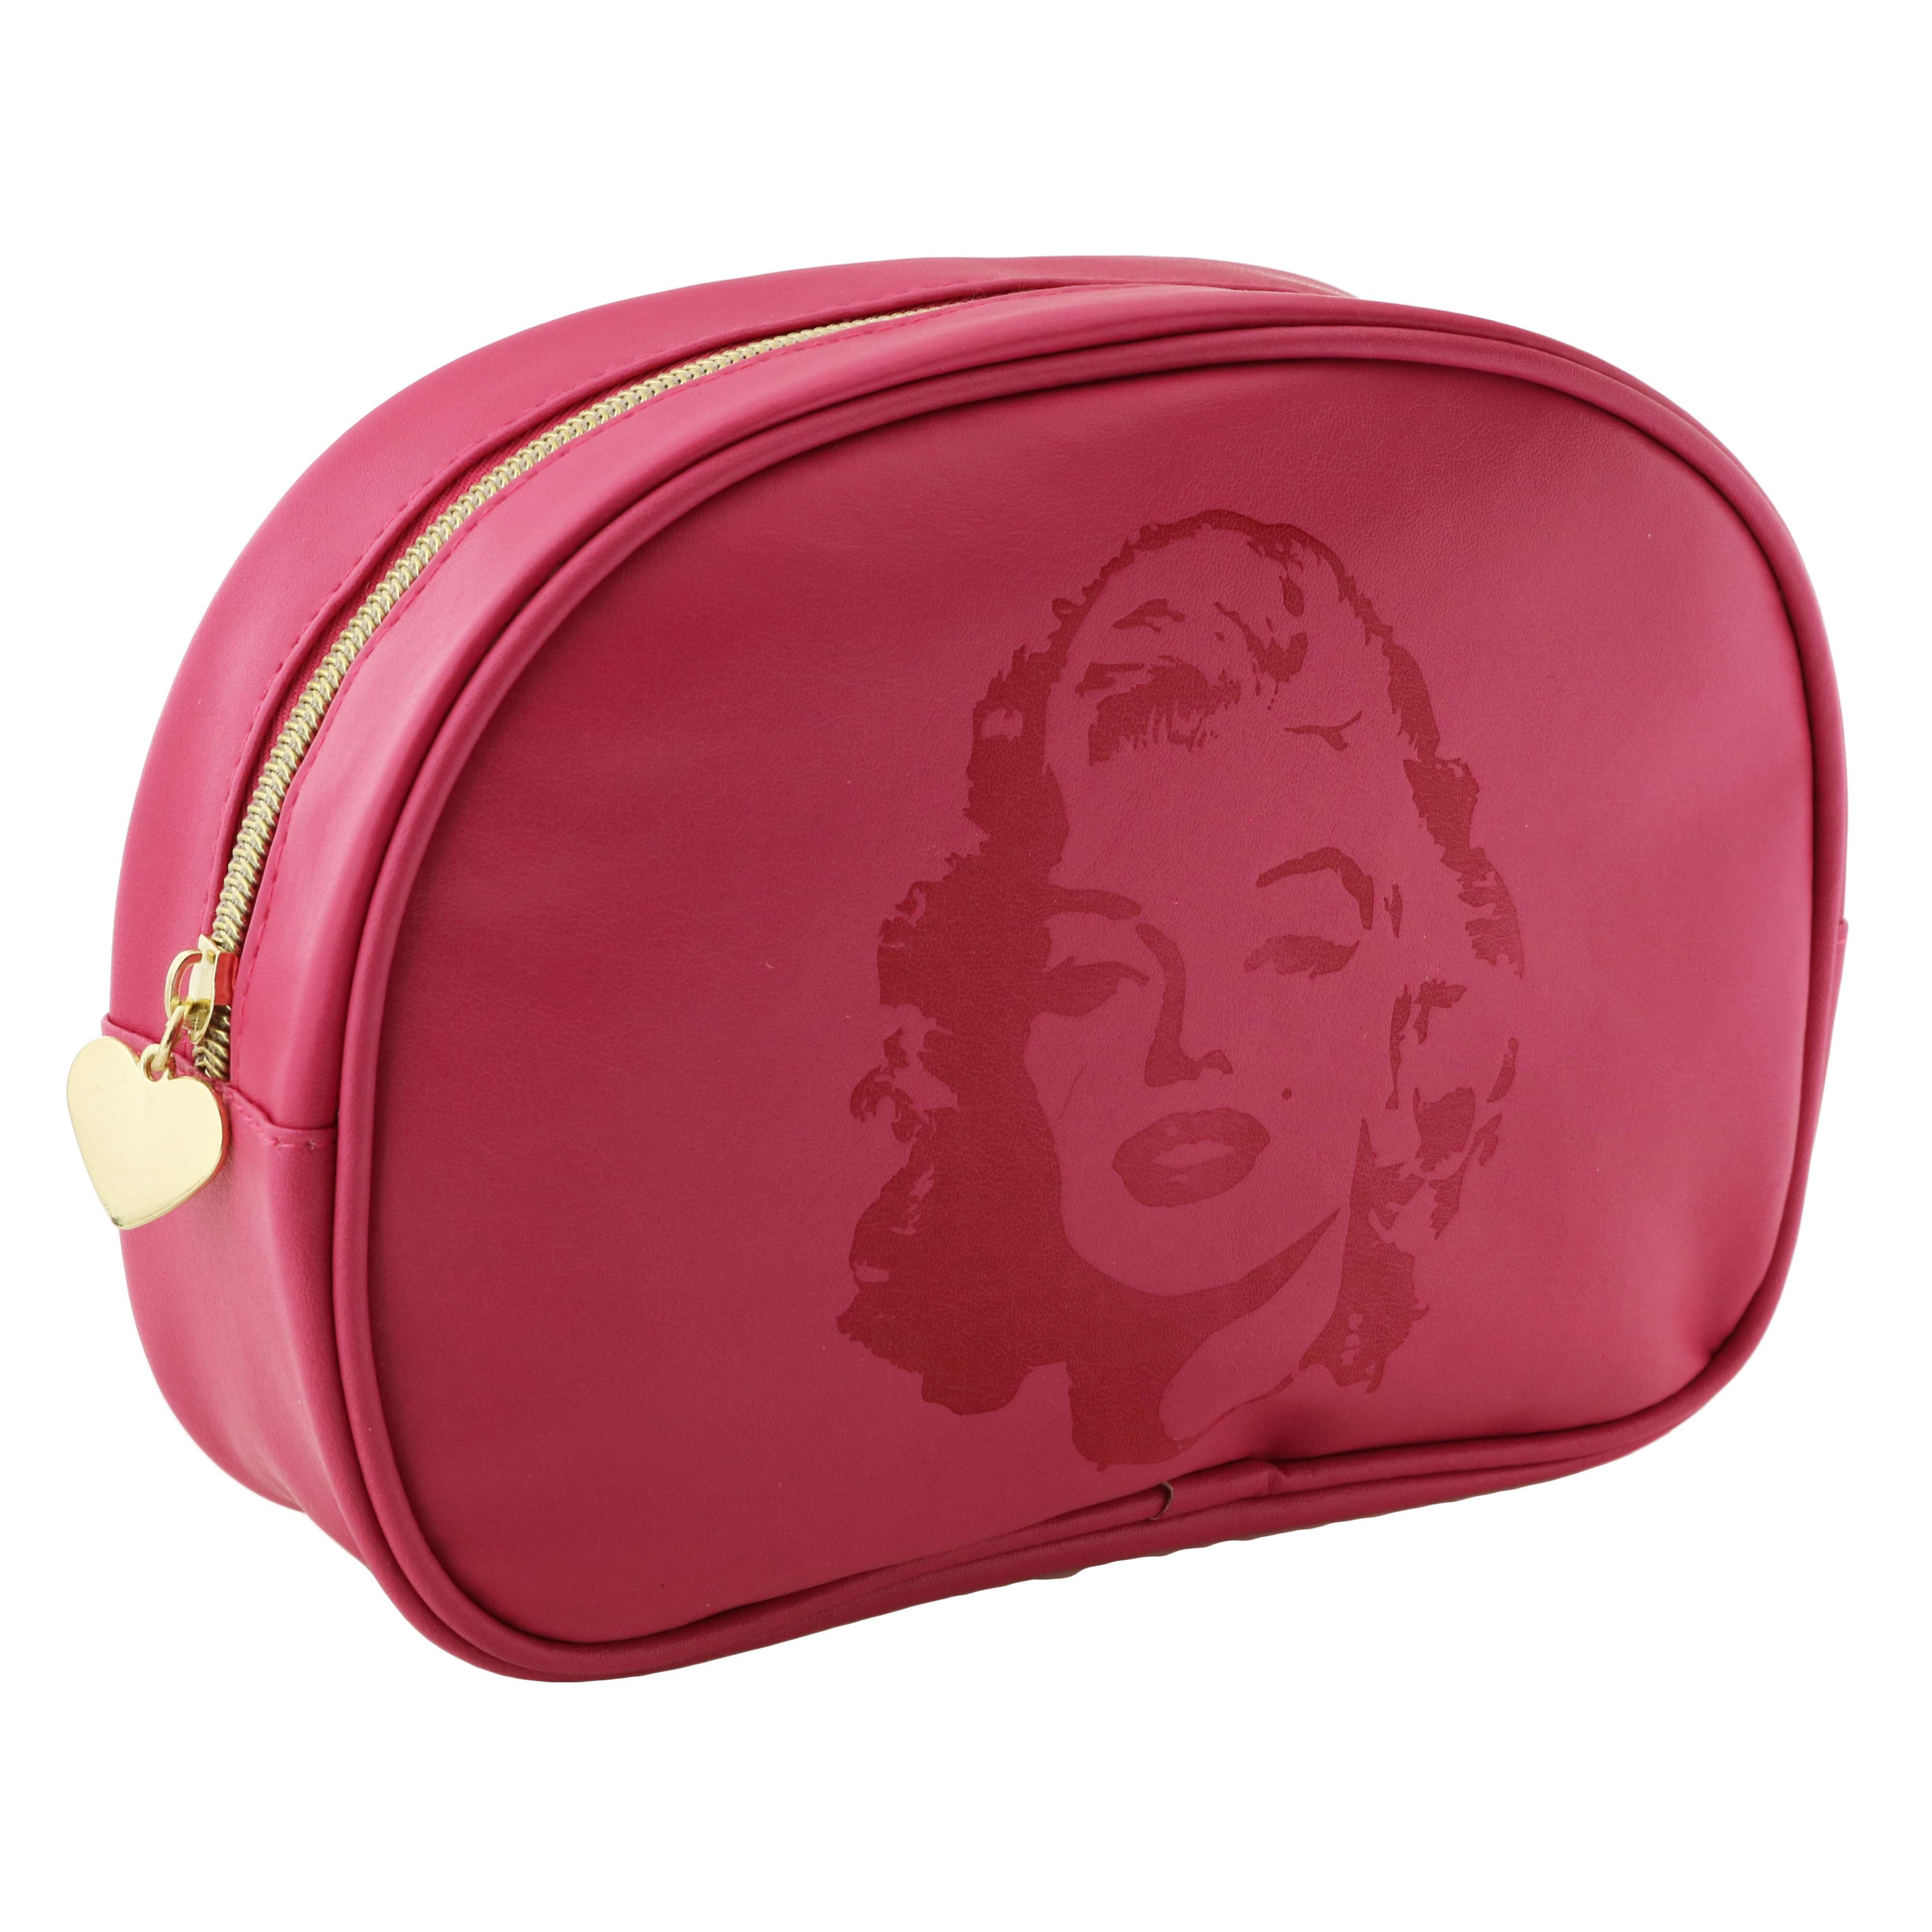 US Handmade Handbag Doctor Bag With marilyn Monroe in 